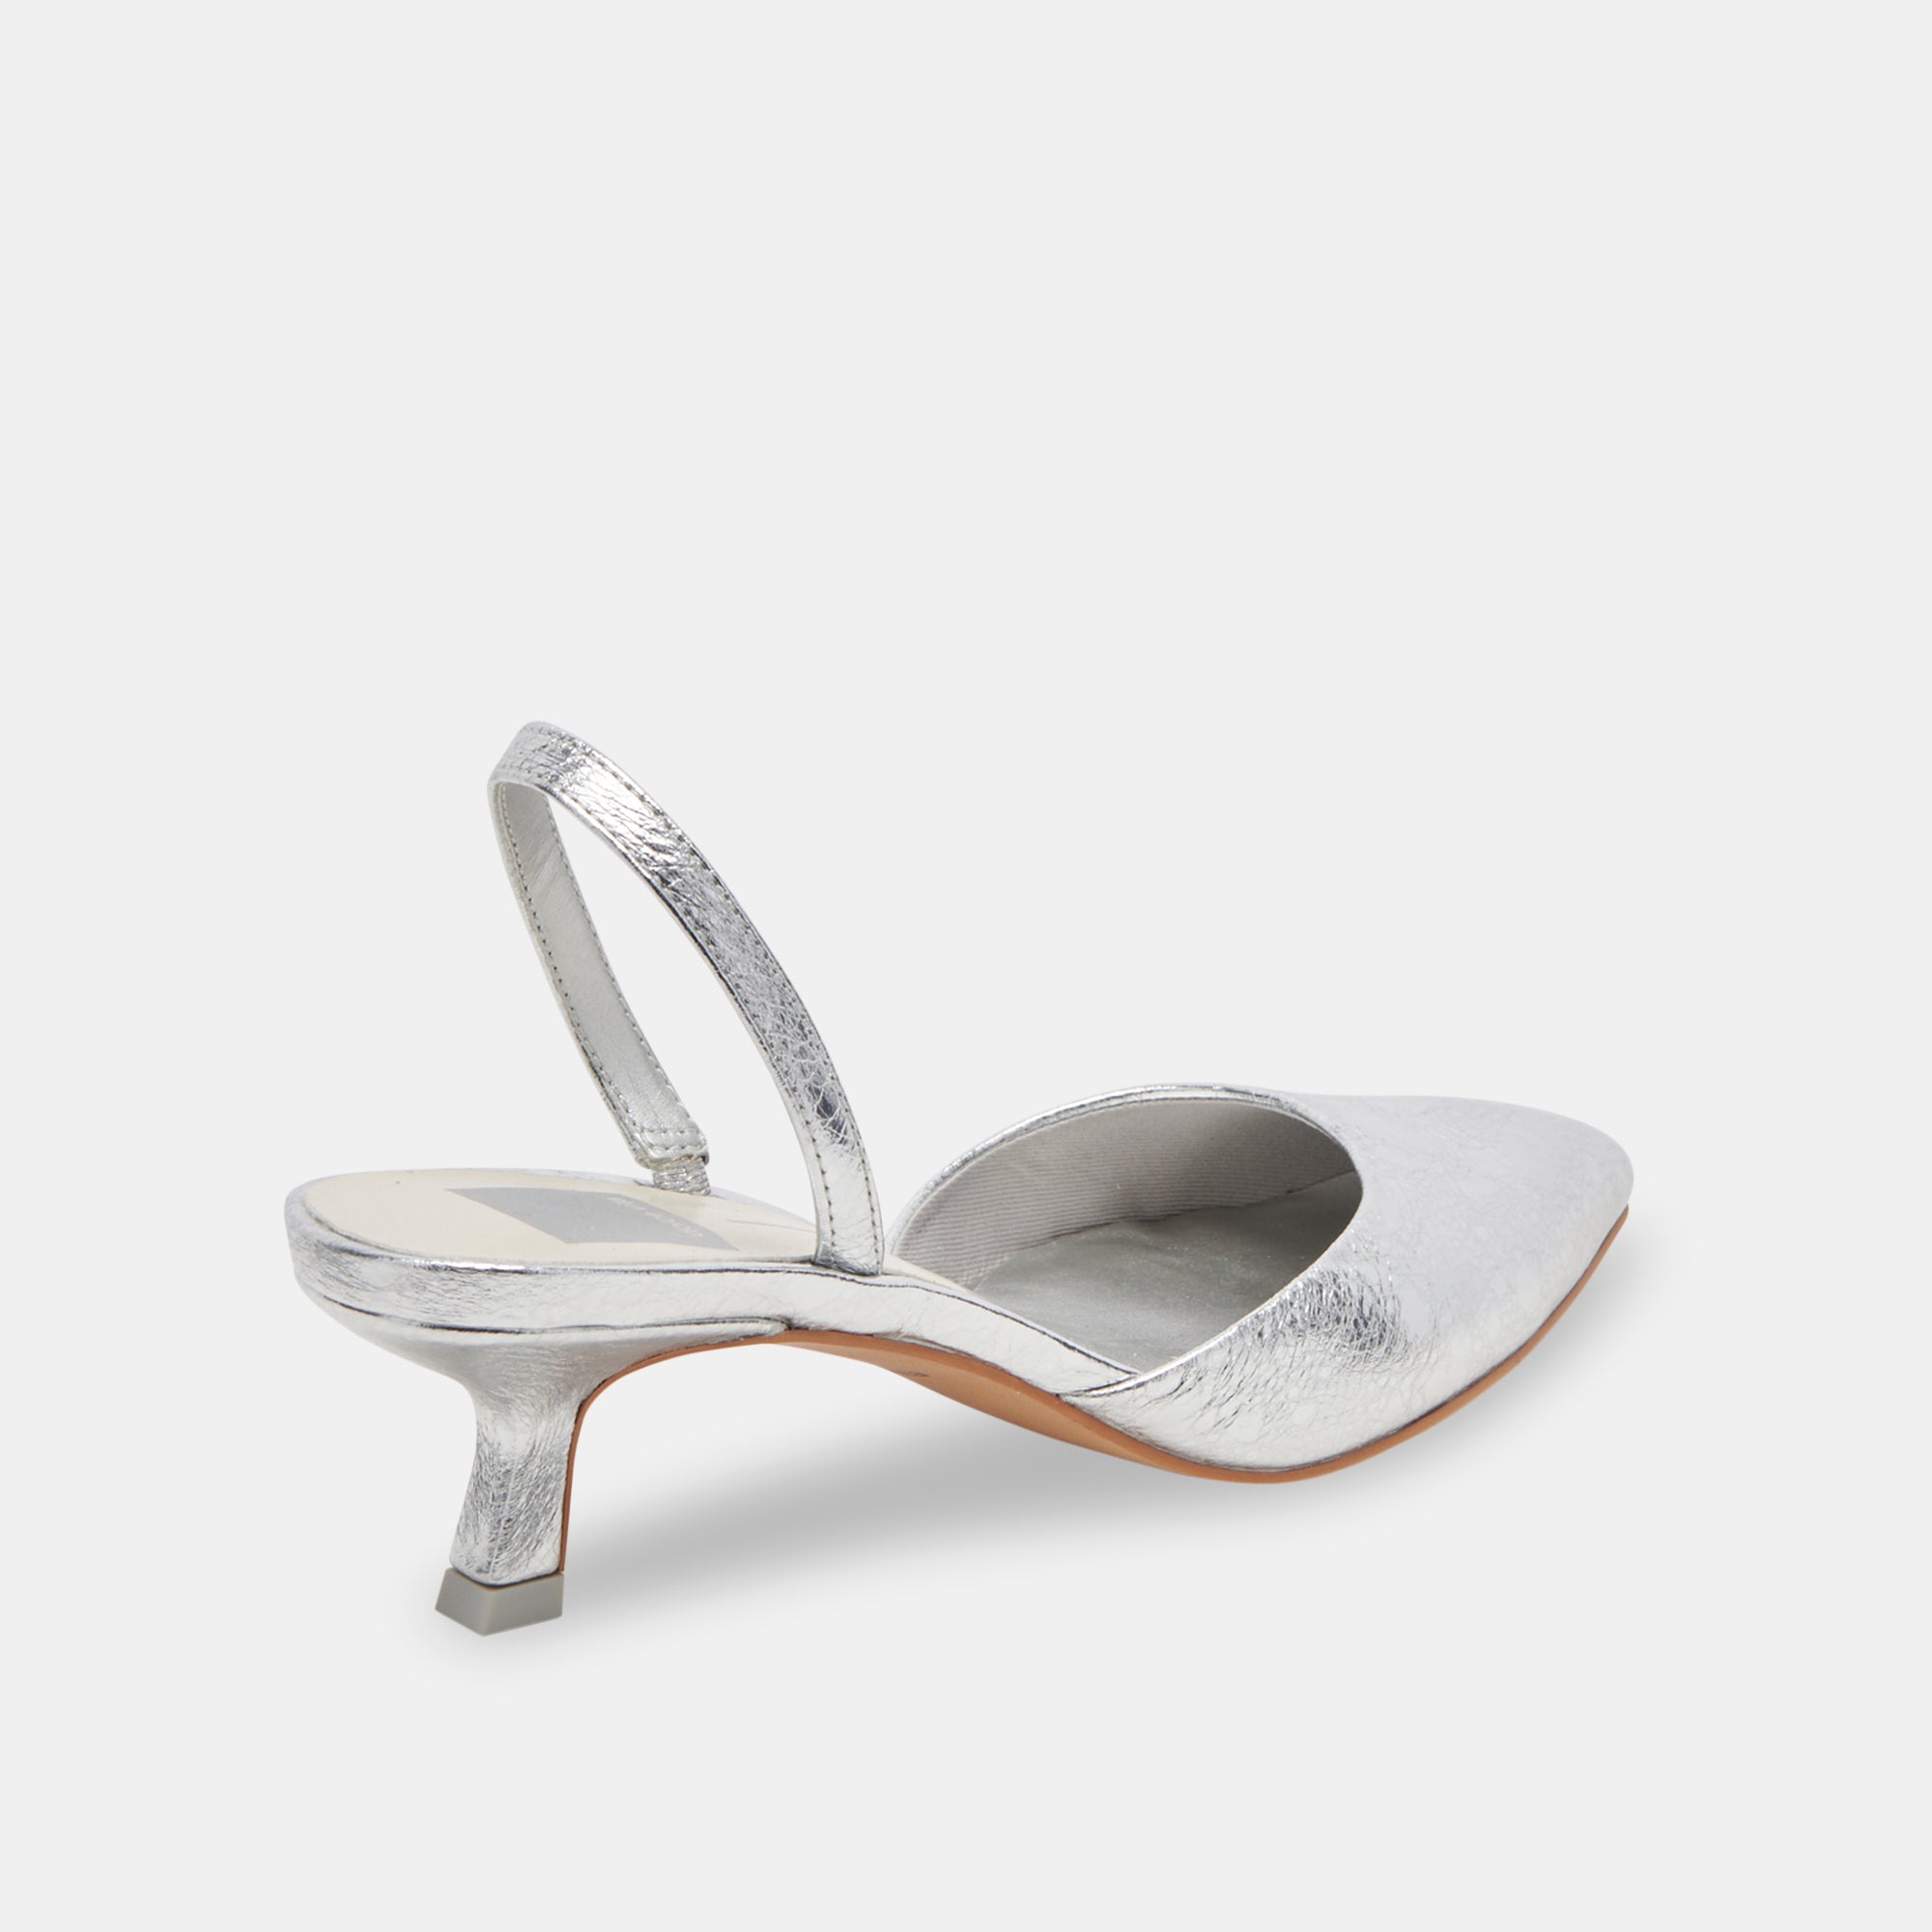 Rhinestone Teardrop Sandal for weddings or events. Bling shoes. |  Rhinestone high heels, Heels, Rhinestone shoes